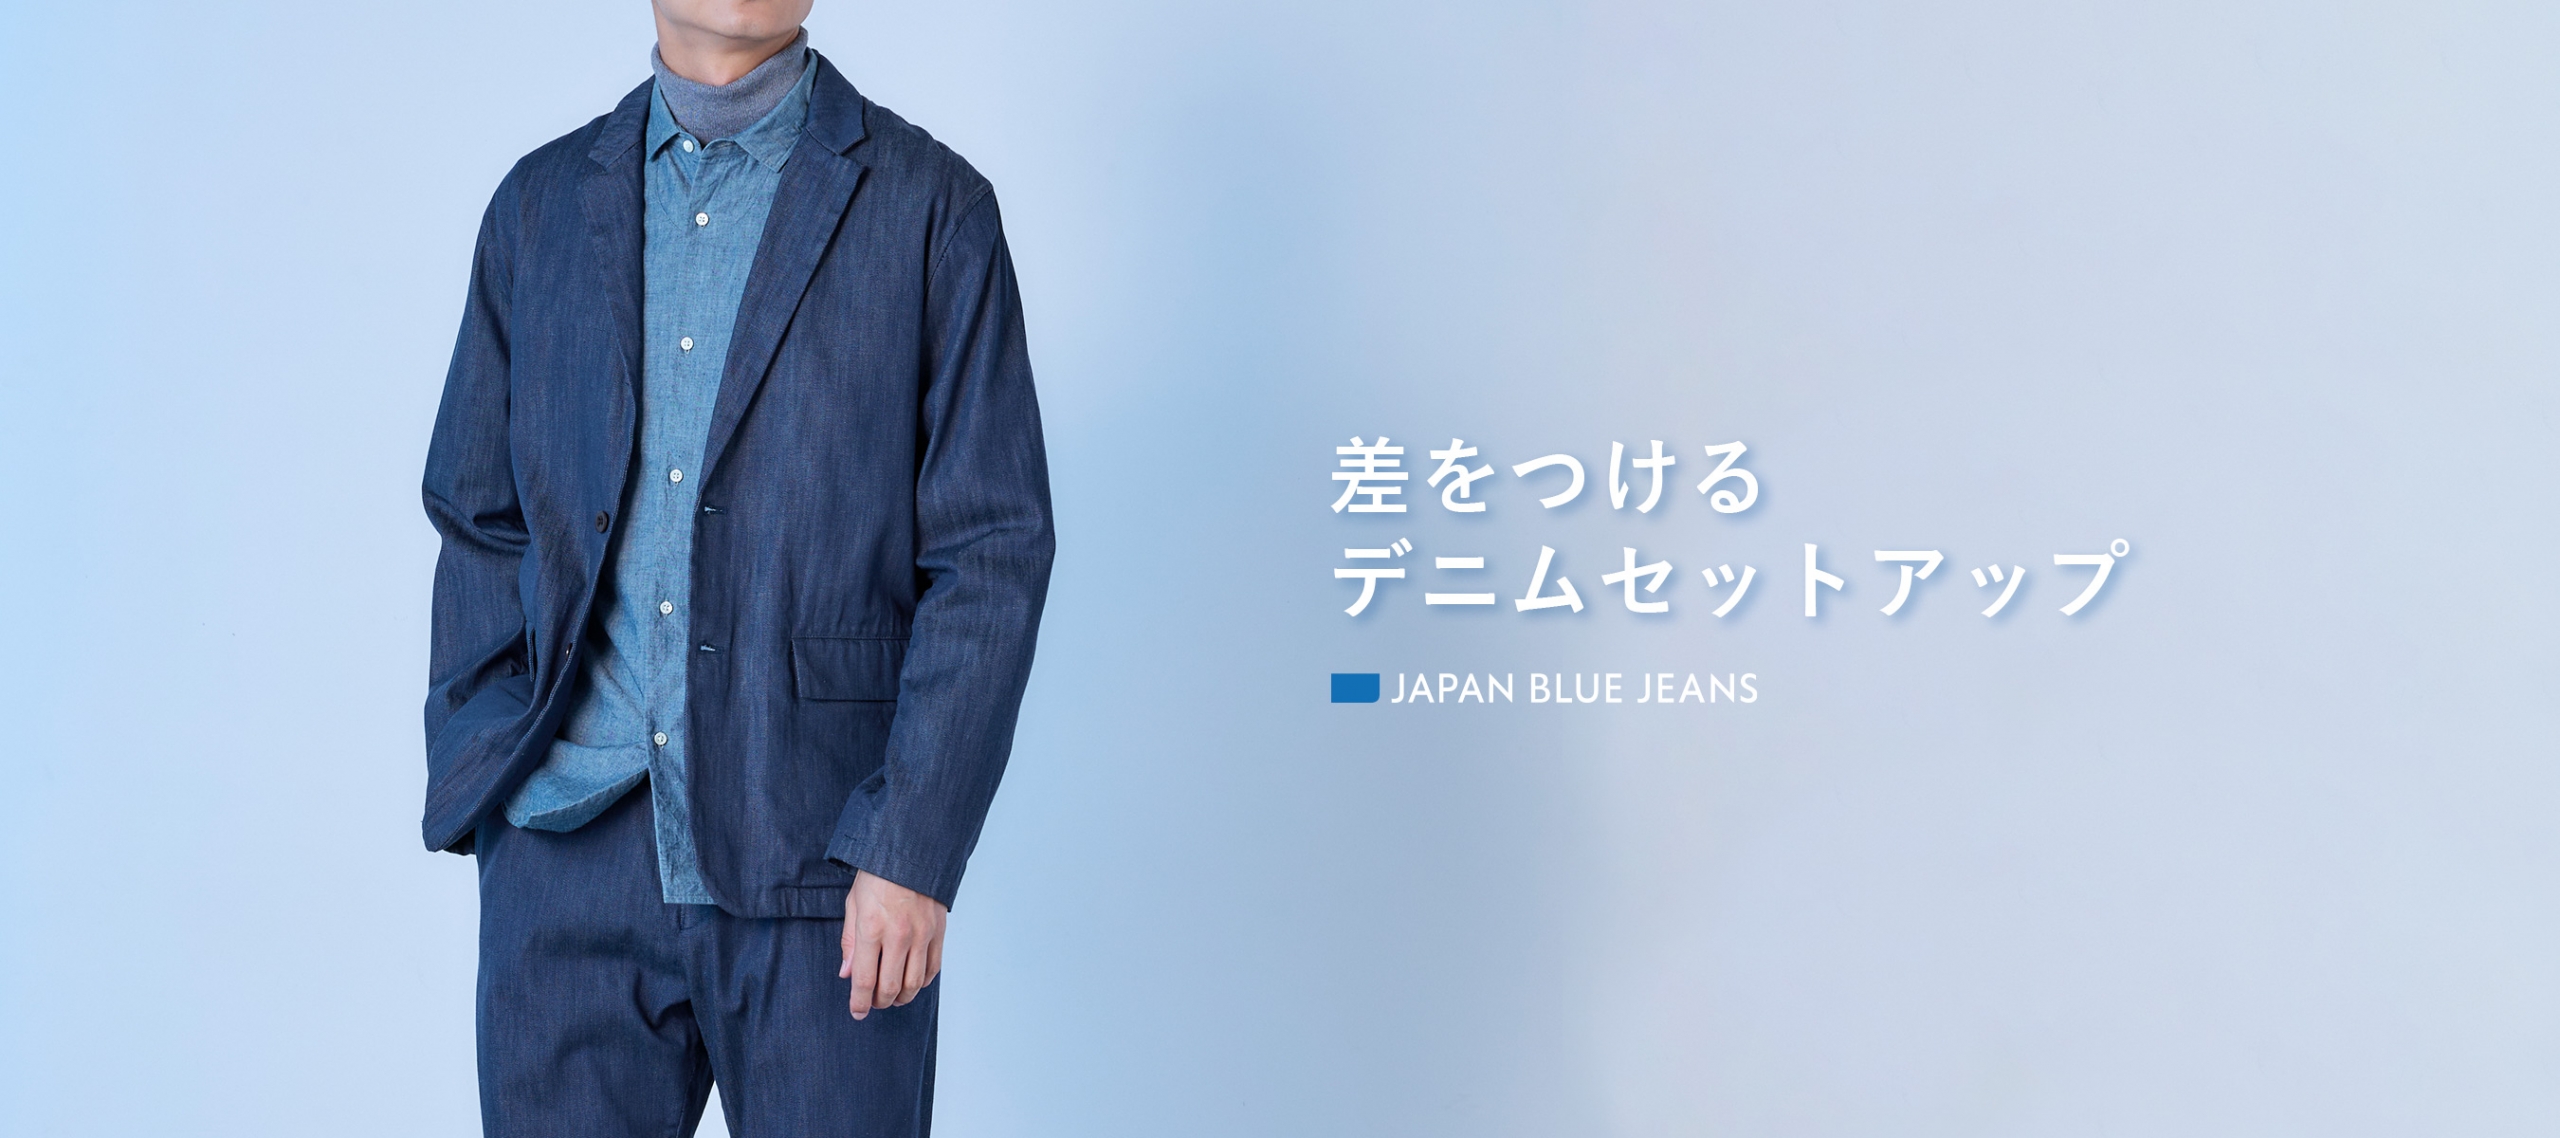 JAPAN BLUE JEANS 差をつけるデニムセットアップ PC版